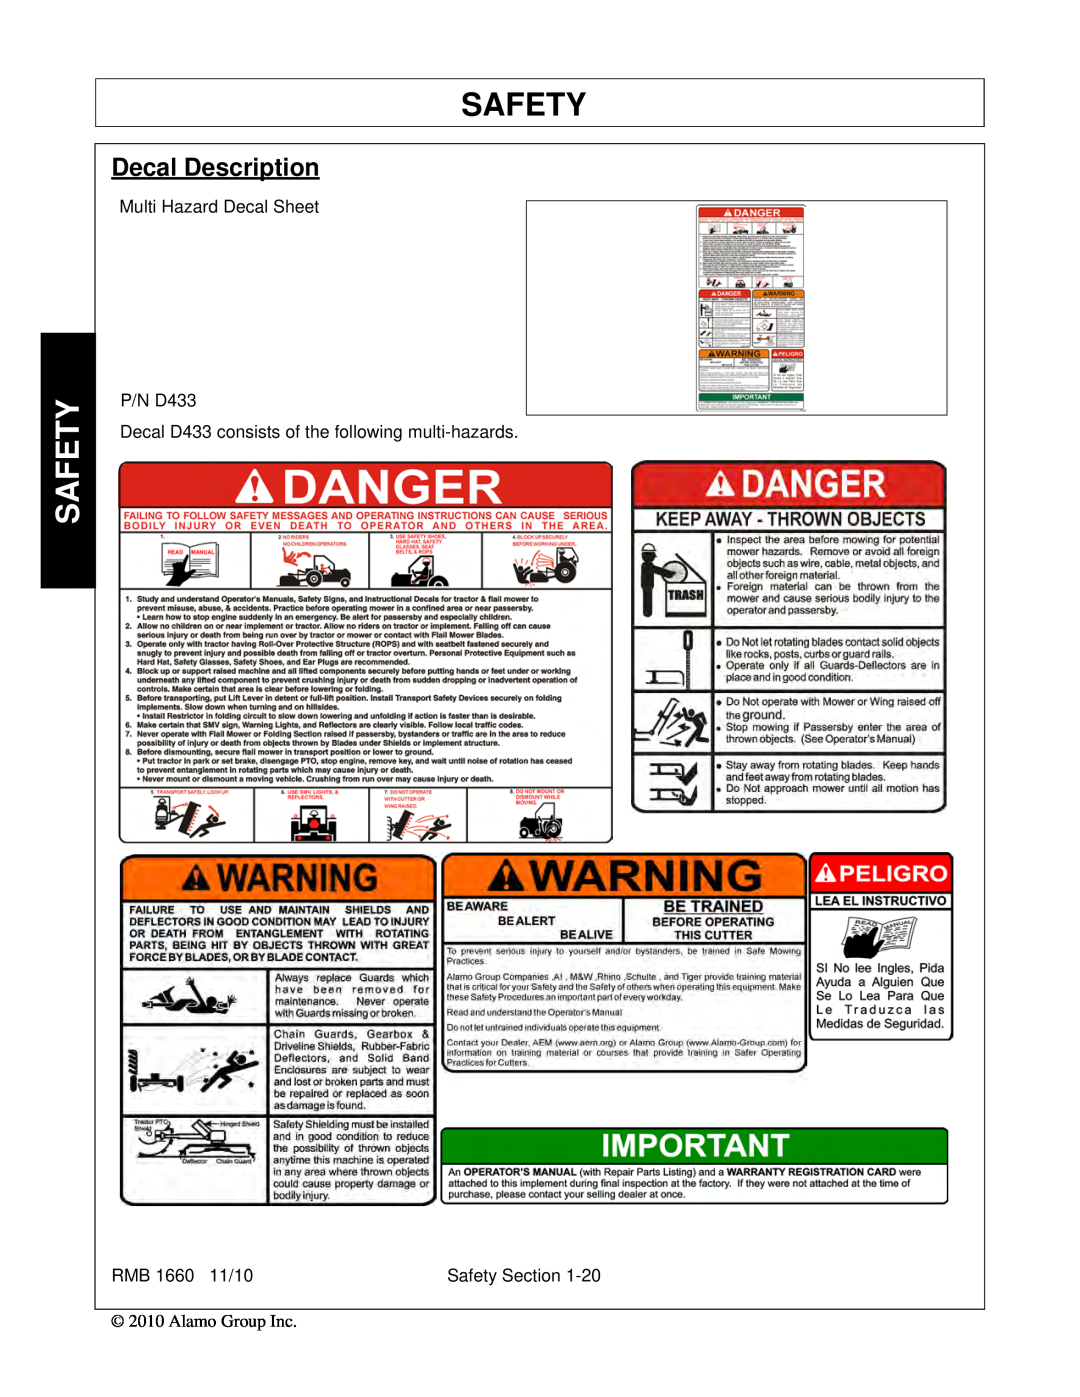 Bush Hog RMB 1660 manual Safety, Decal Description 